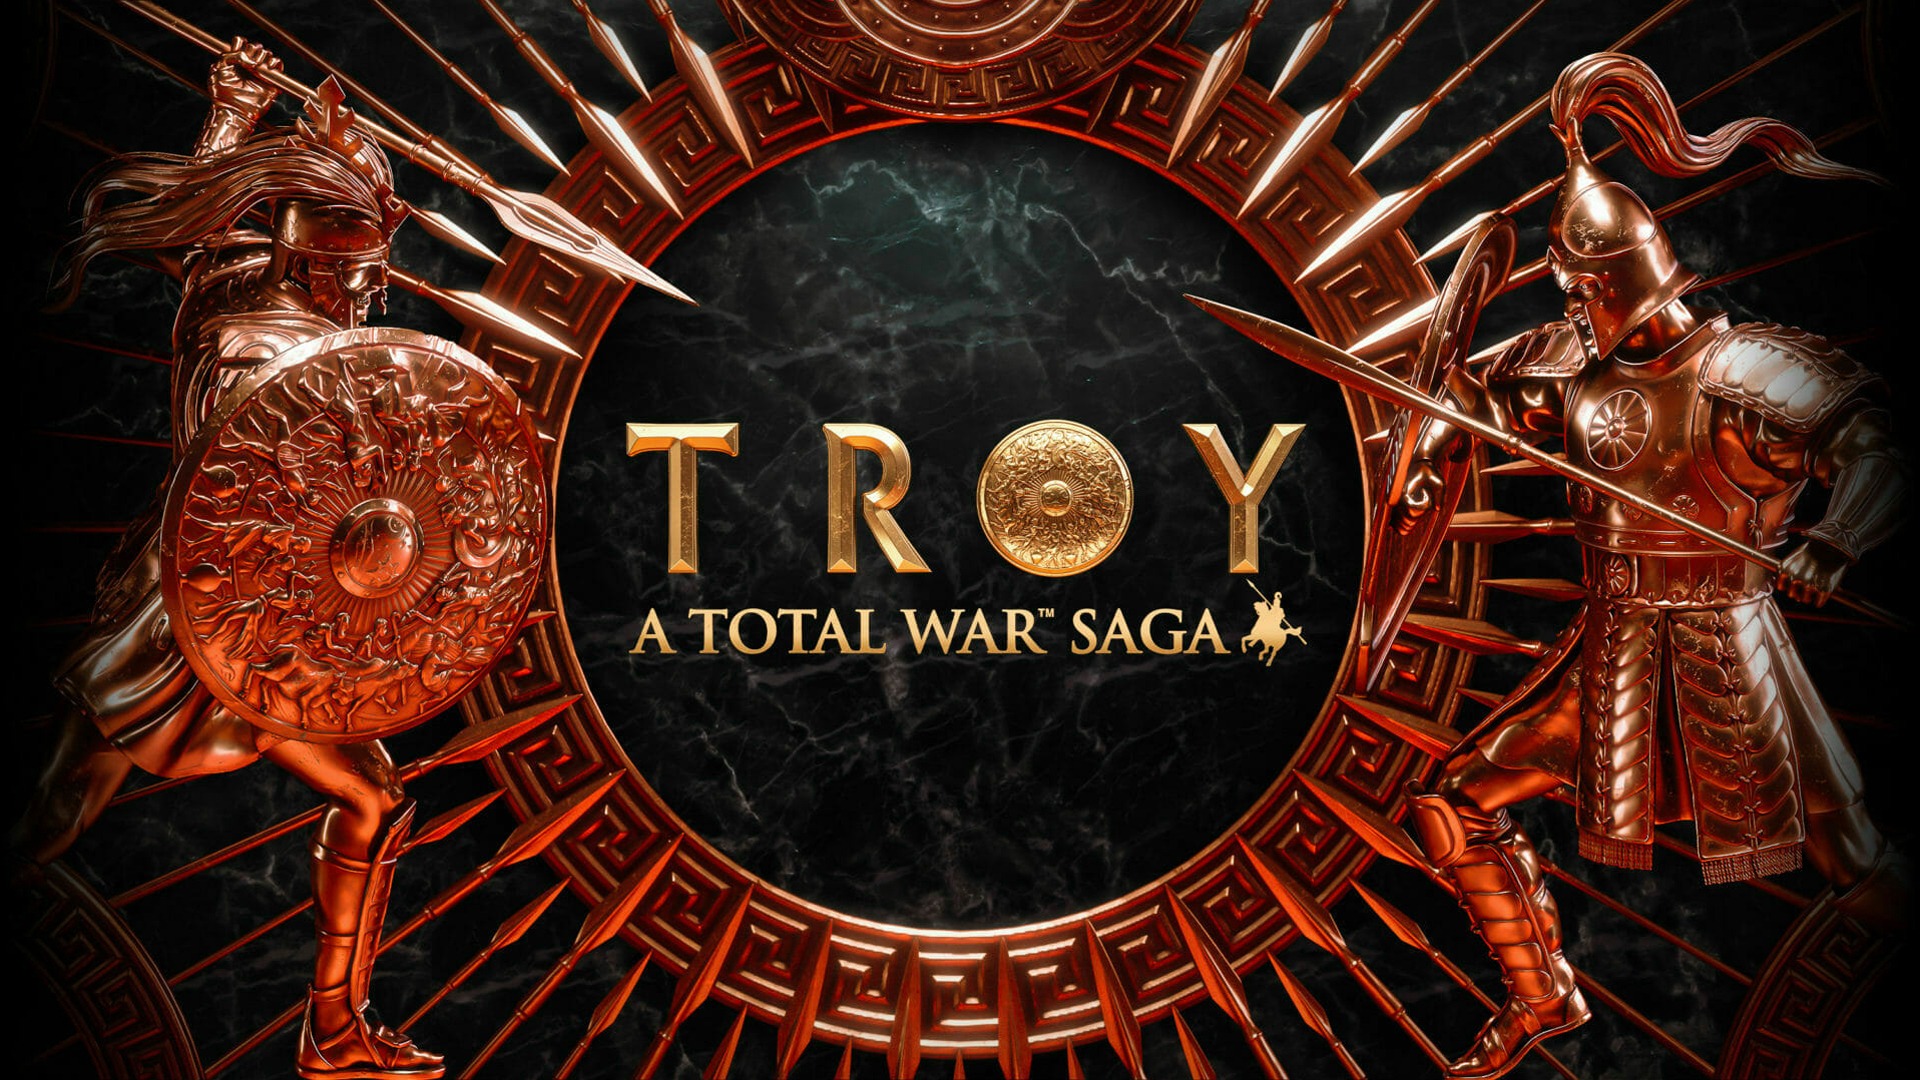 A Total War Saga TROY epic